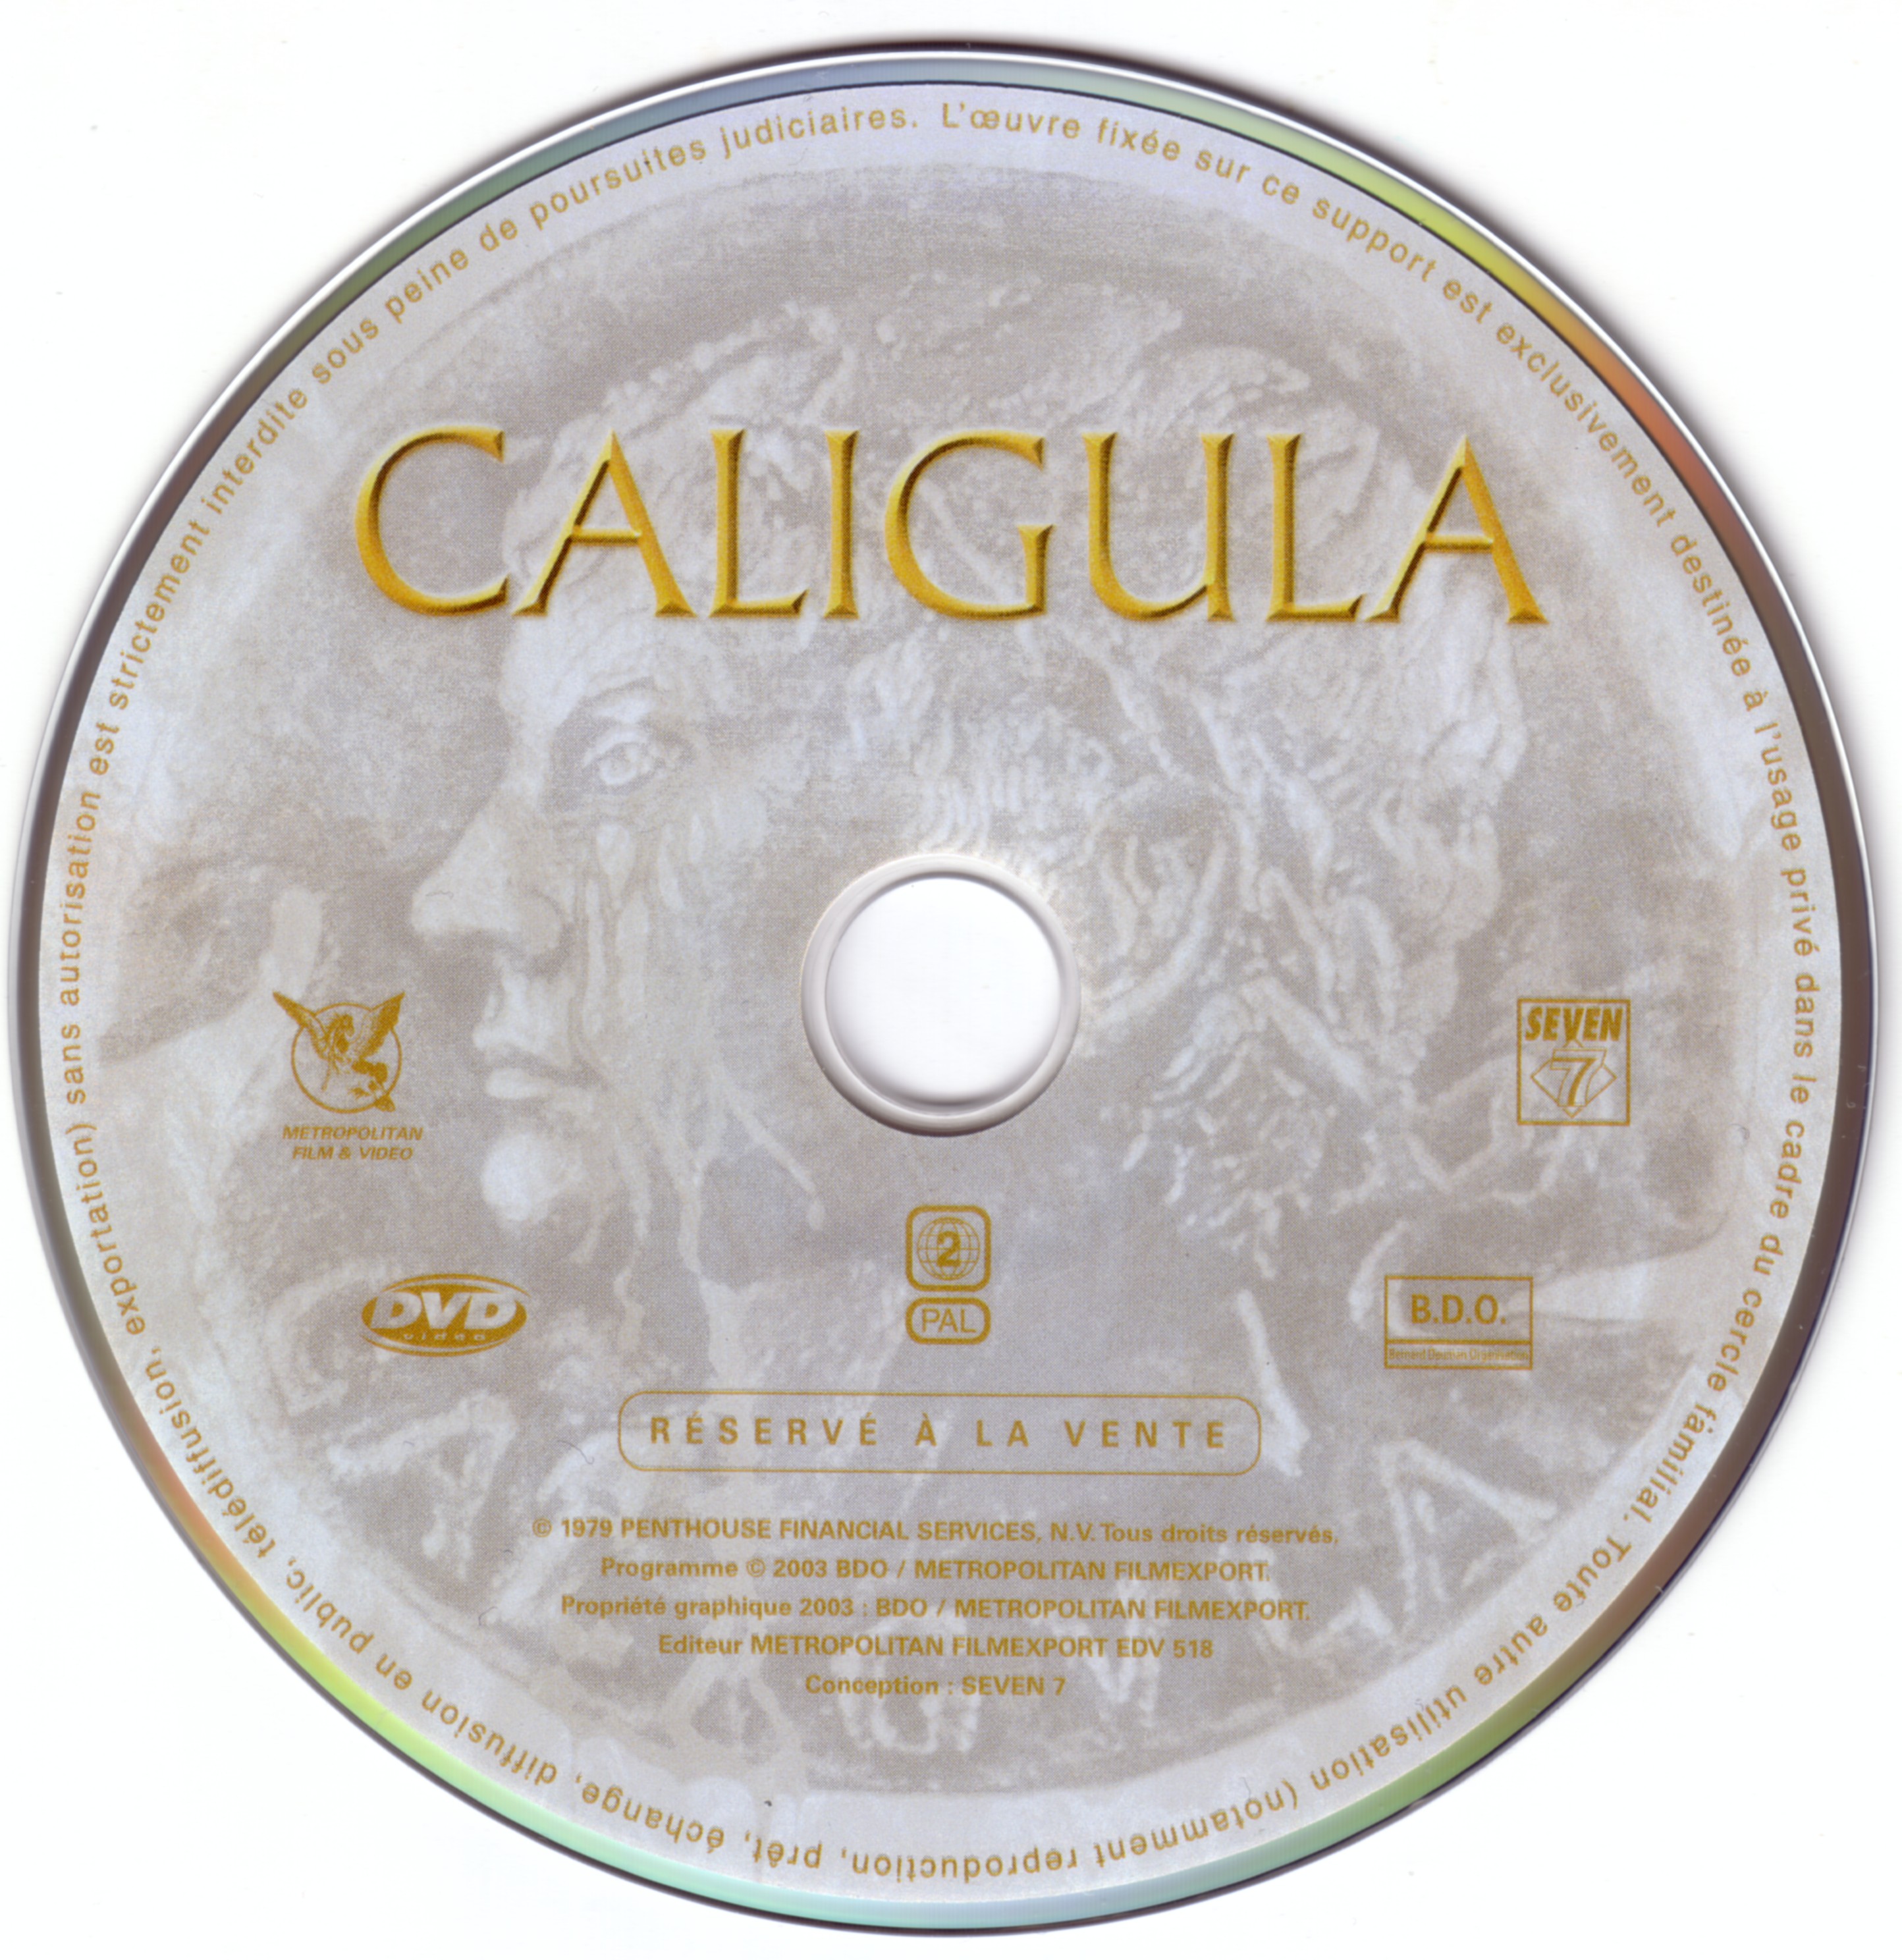 Caligula v2